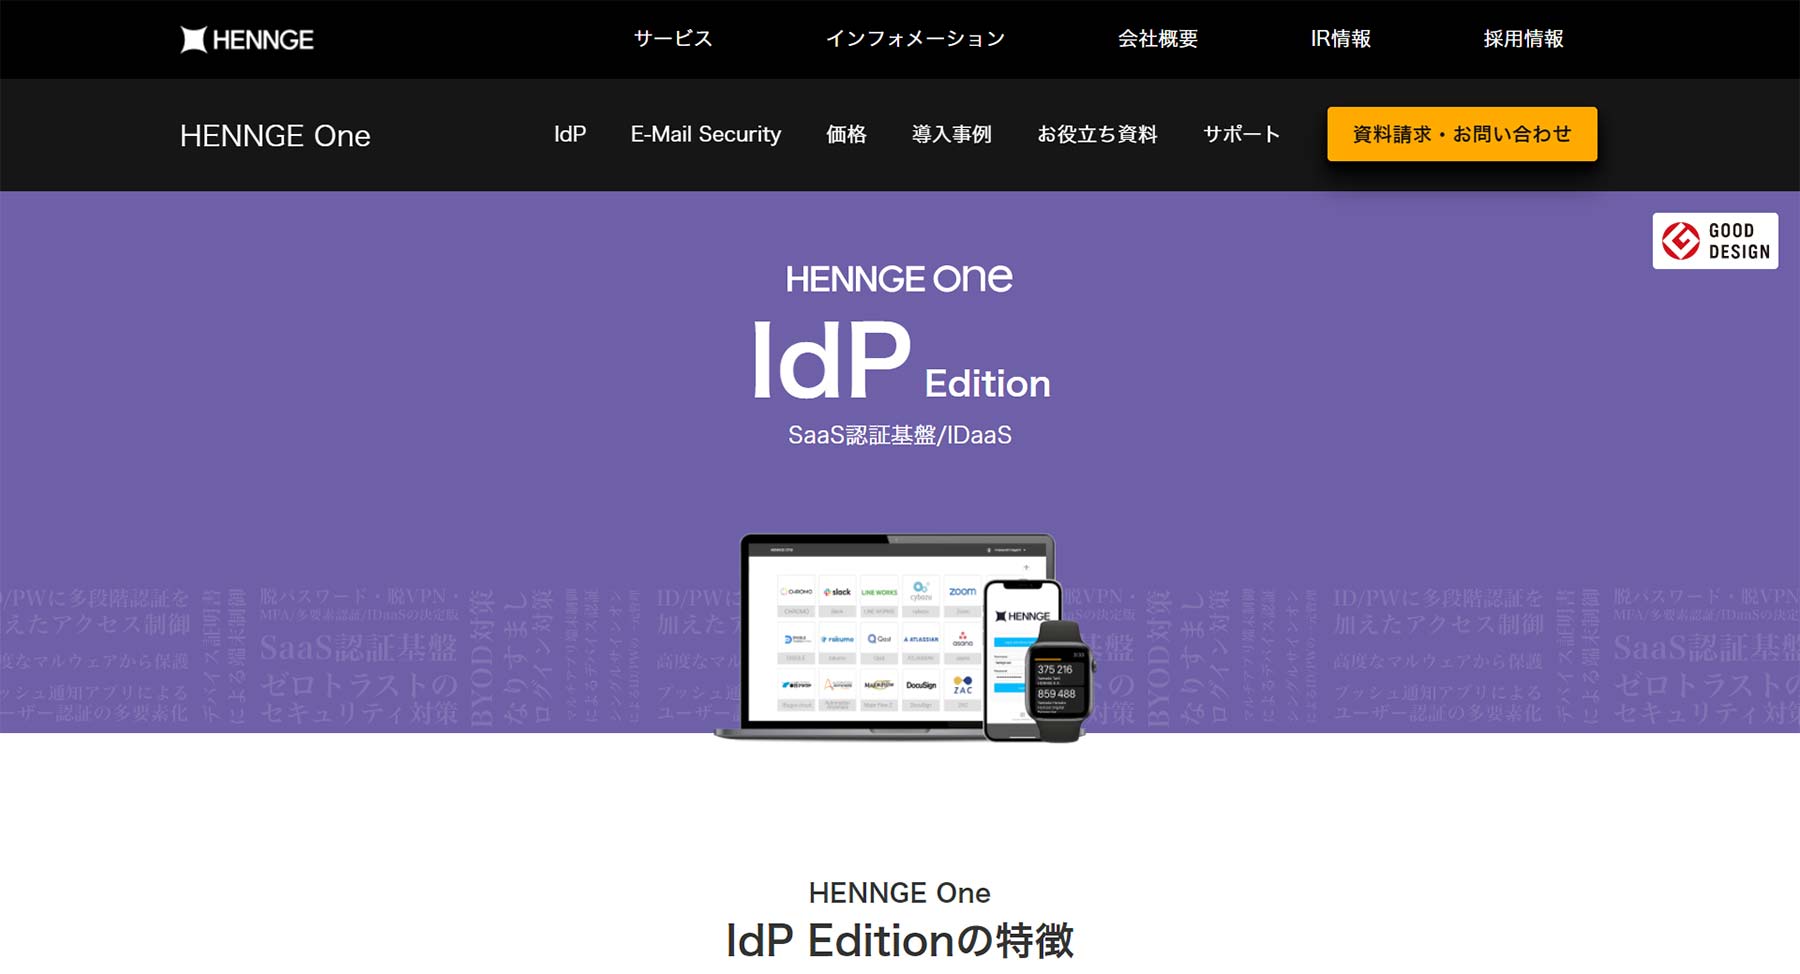 HENNGE One Idp Edition公式Webサイト